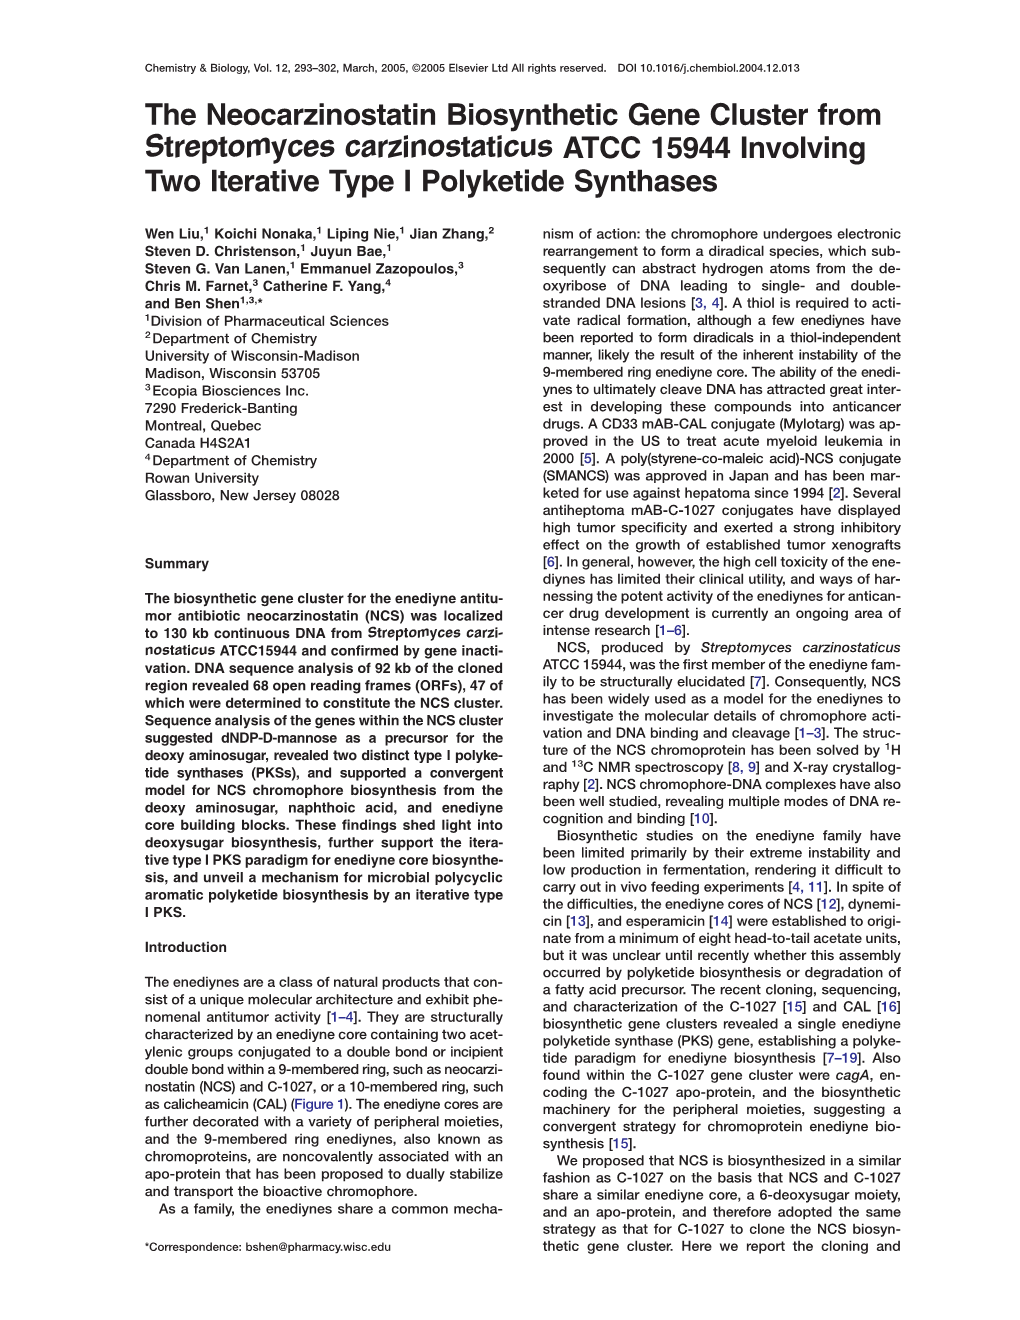 The Neocarzinostatin Biosynthetic Gene Cluster from Streptomyces Carzinostaticus ATCC 15944 Involving Two Iterative Type I Polyketide Synthases